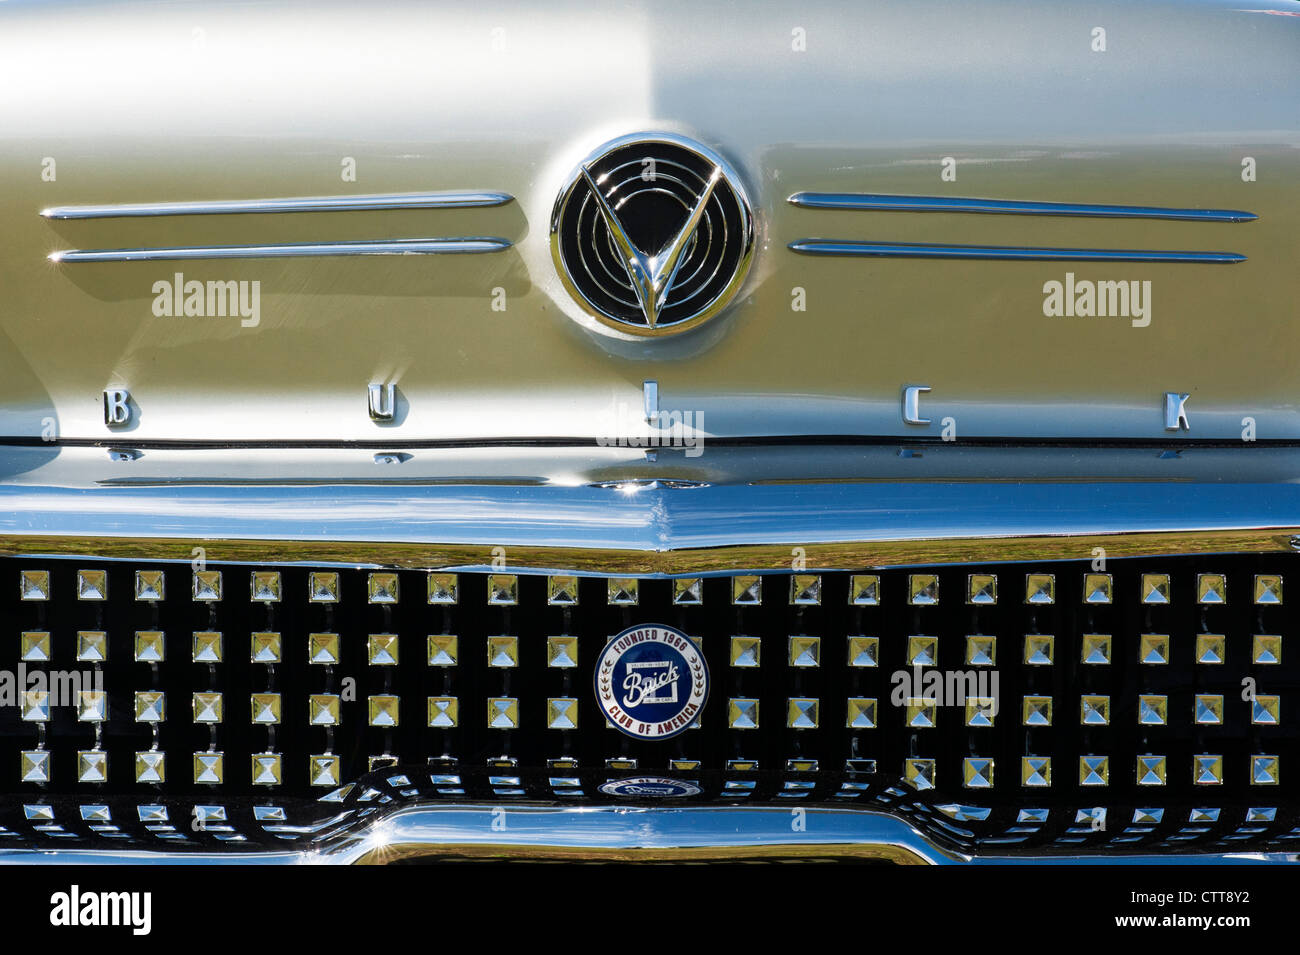 1958 Buick super. Classic American fifties car Stock Photo